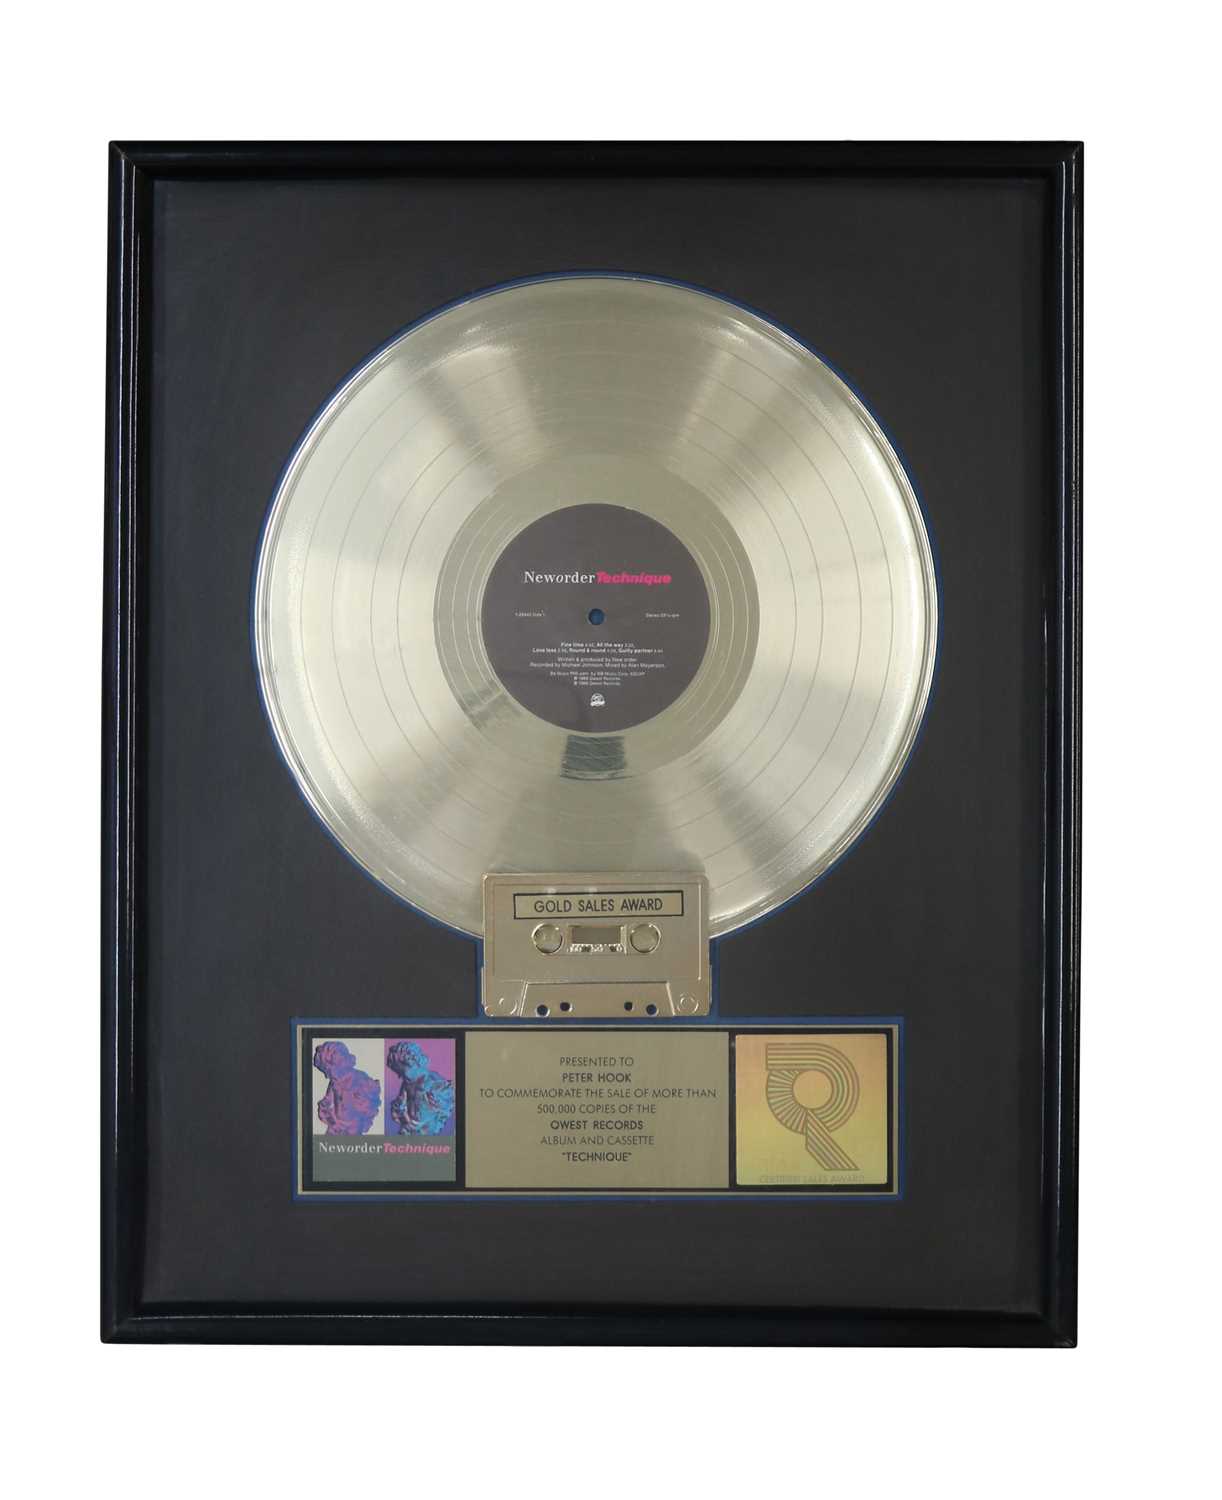 NEW ORDER RIAA GOLD AWARD FOR TECHNIQUE